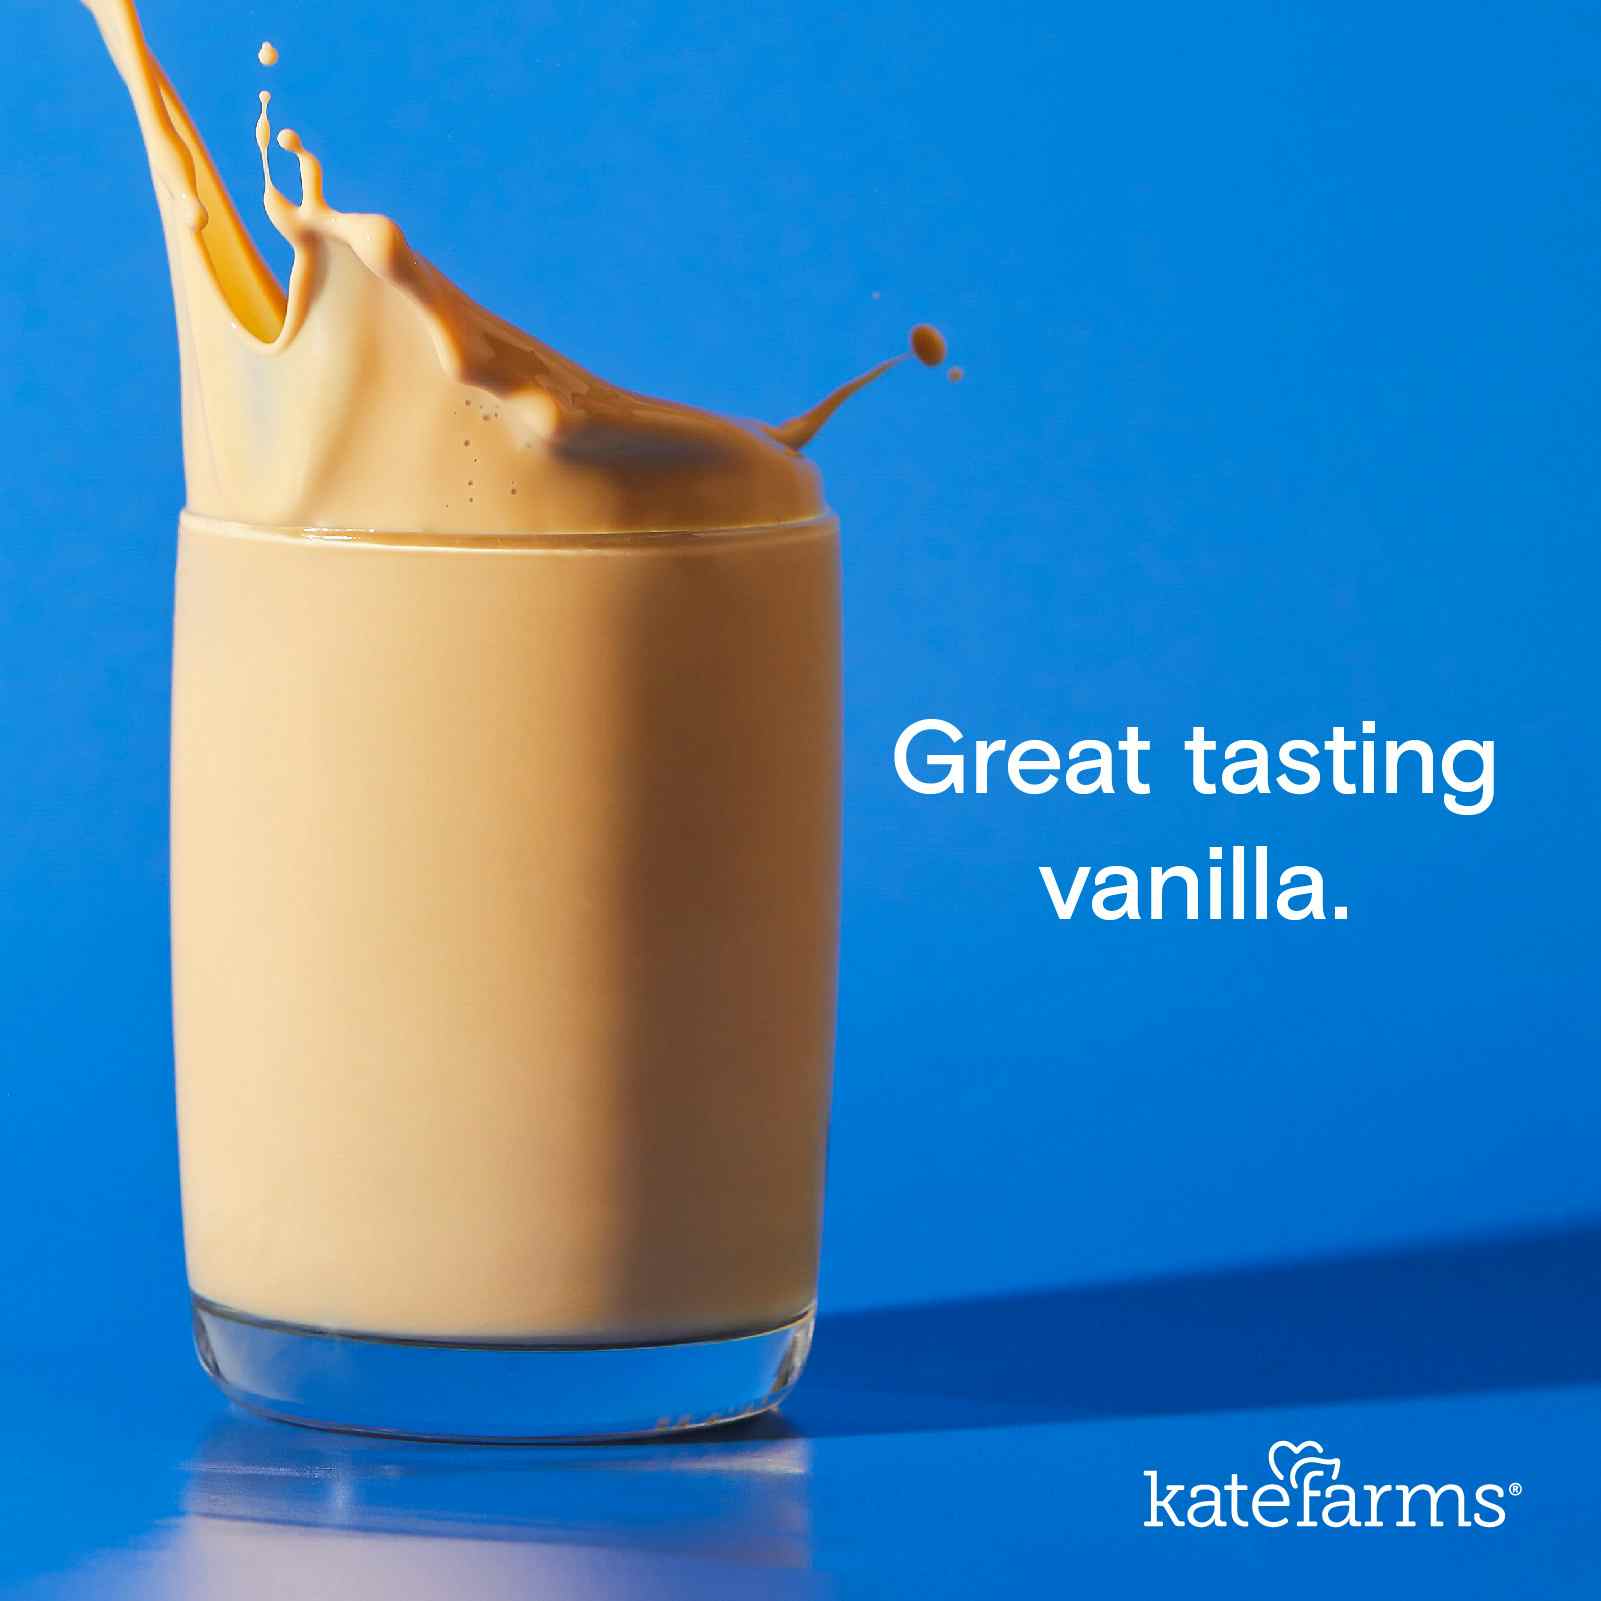 Kate Farms Standard 1.0 Sole-Source Nutrition Formula, Vanilla, 11 oz.